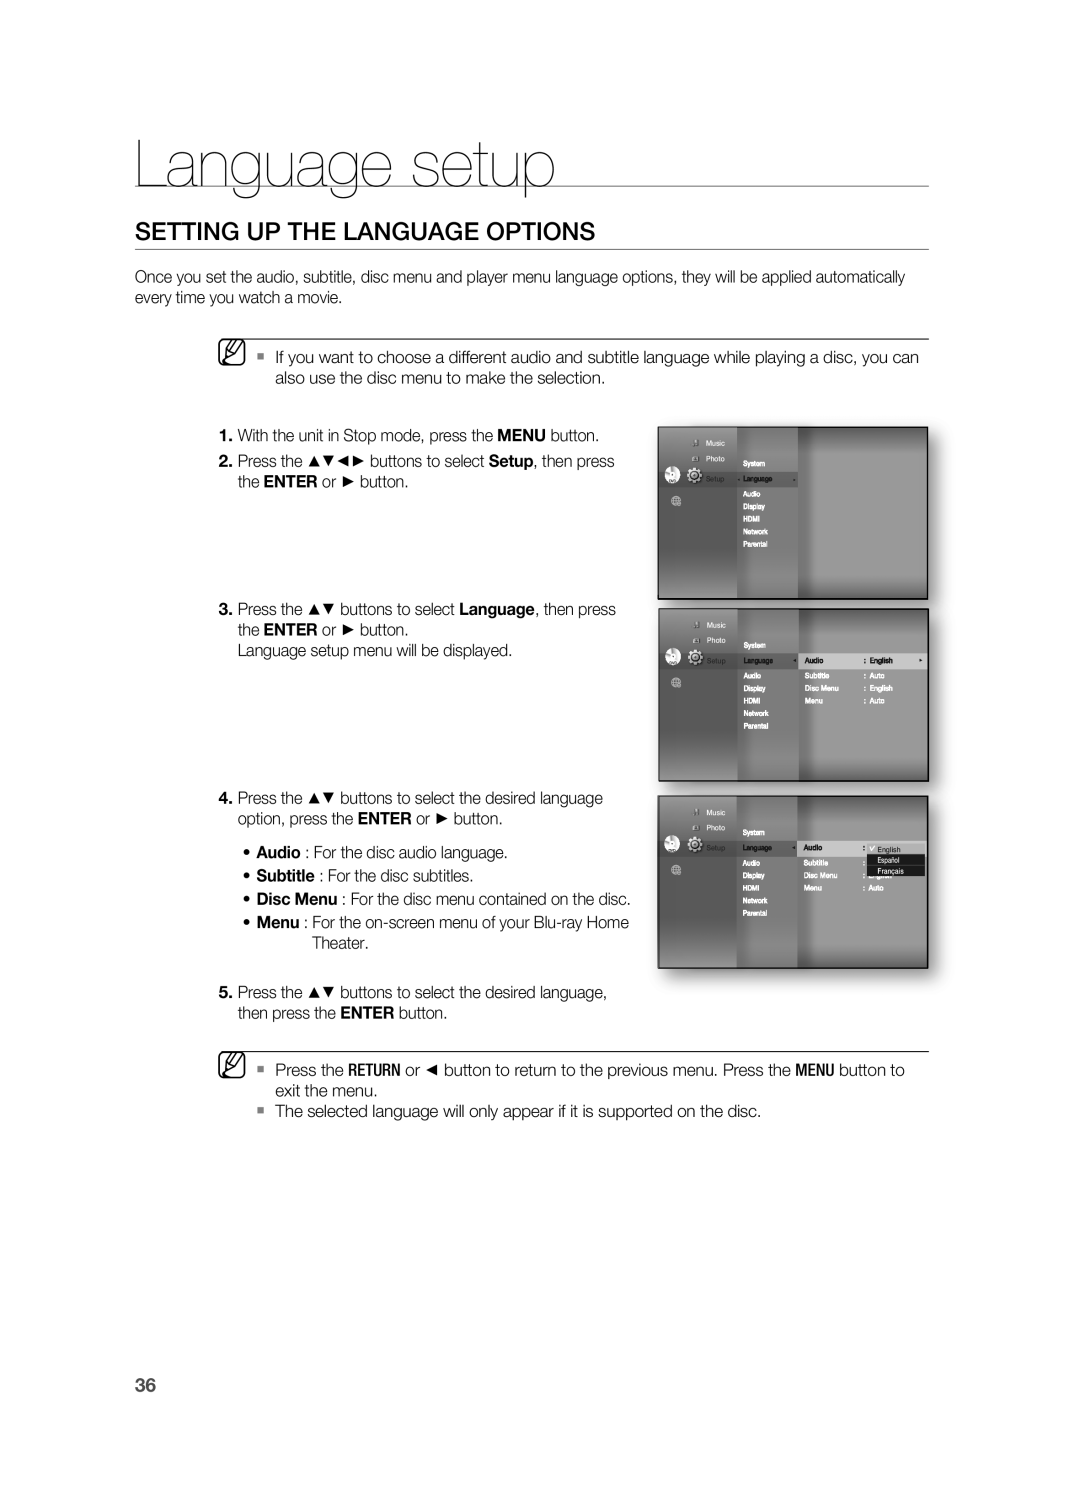 Samsung HT-BD8200 user manual Language setup, Setting Up The Language Options, • Audio : For the disc audio language 